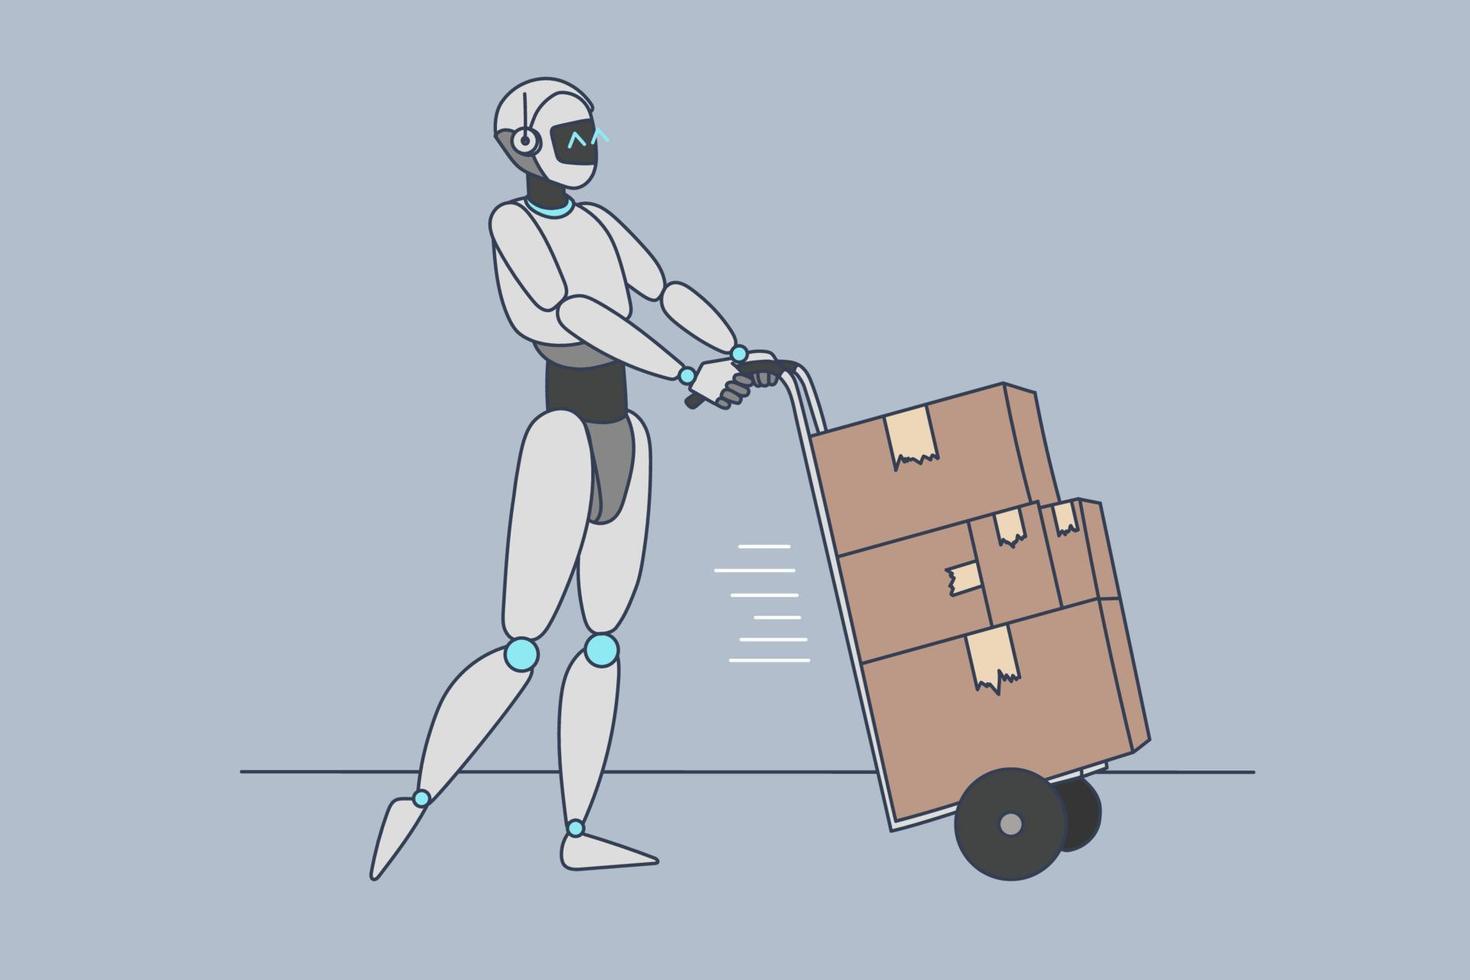 robot asistente con pista entregar paquetes parcelas a personas clientela. virtual digital humanoide ayudante portador hacer entrega a cliente. moderno tecnología, innovación. plano vector ilustración.